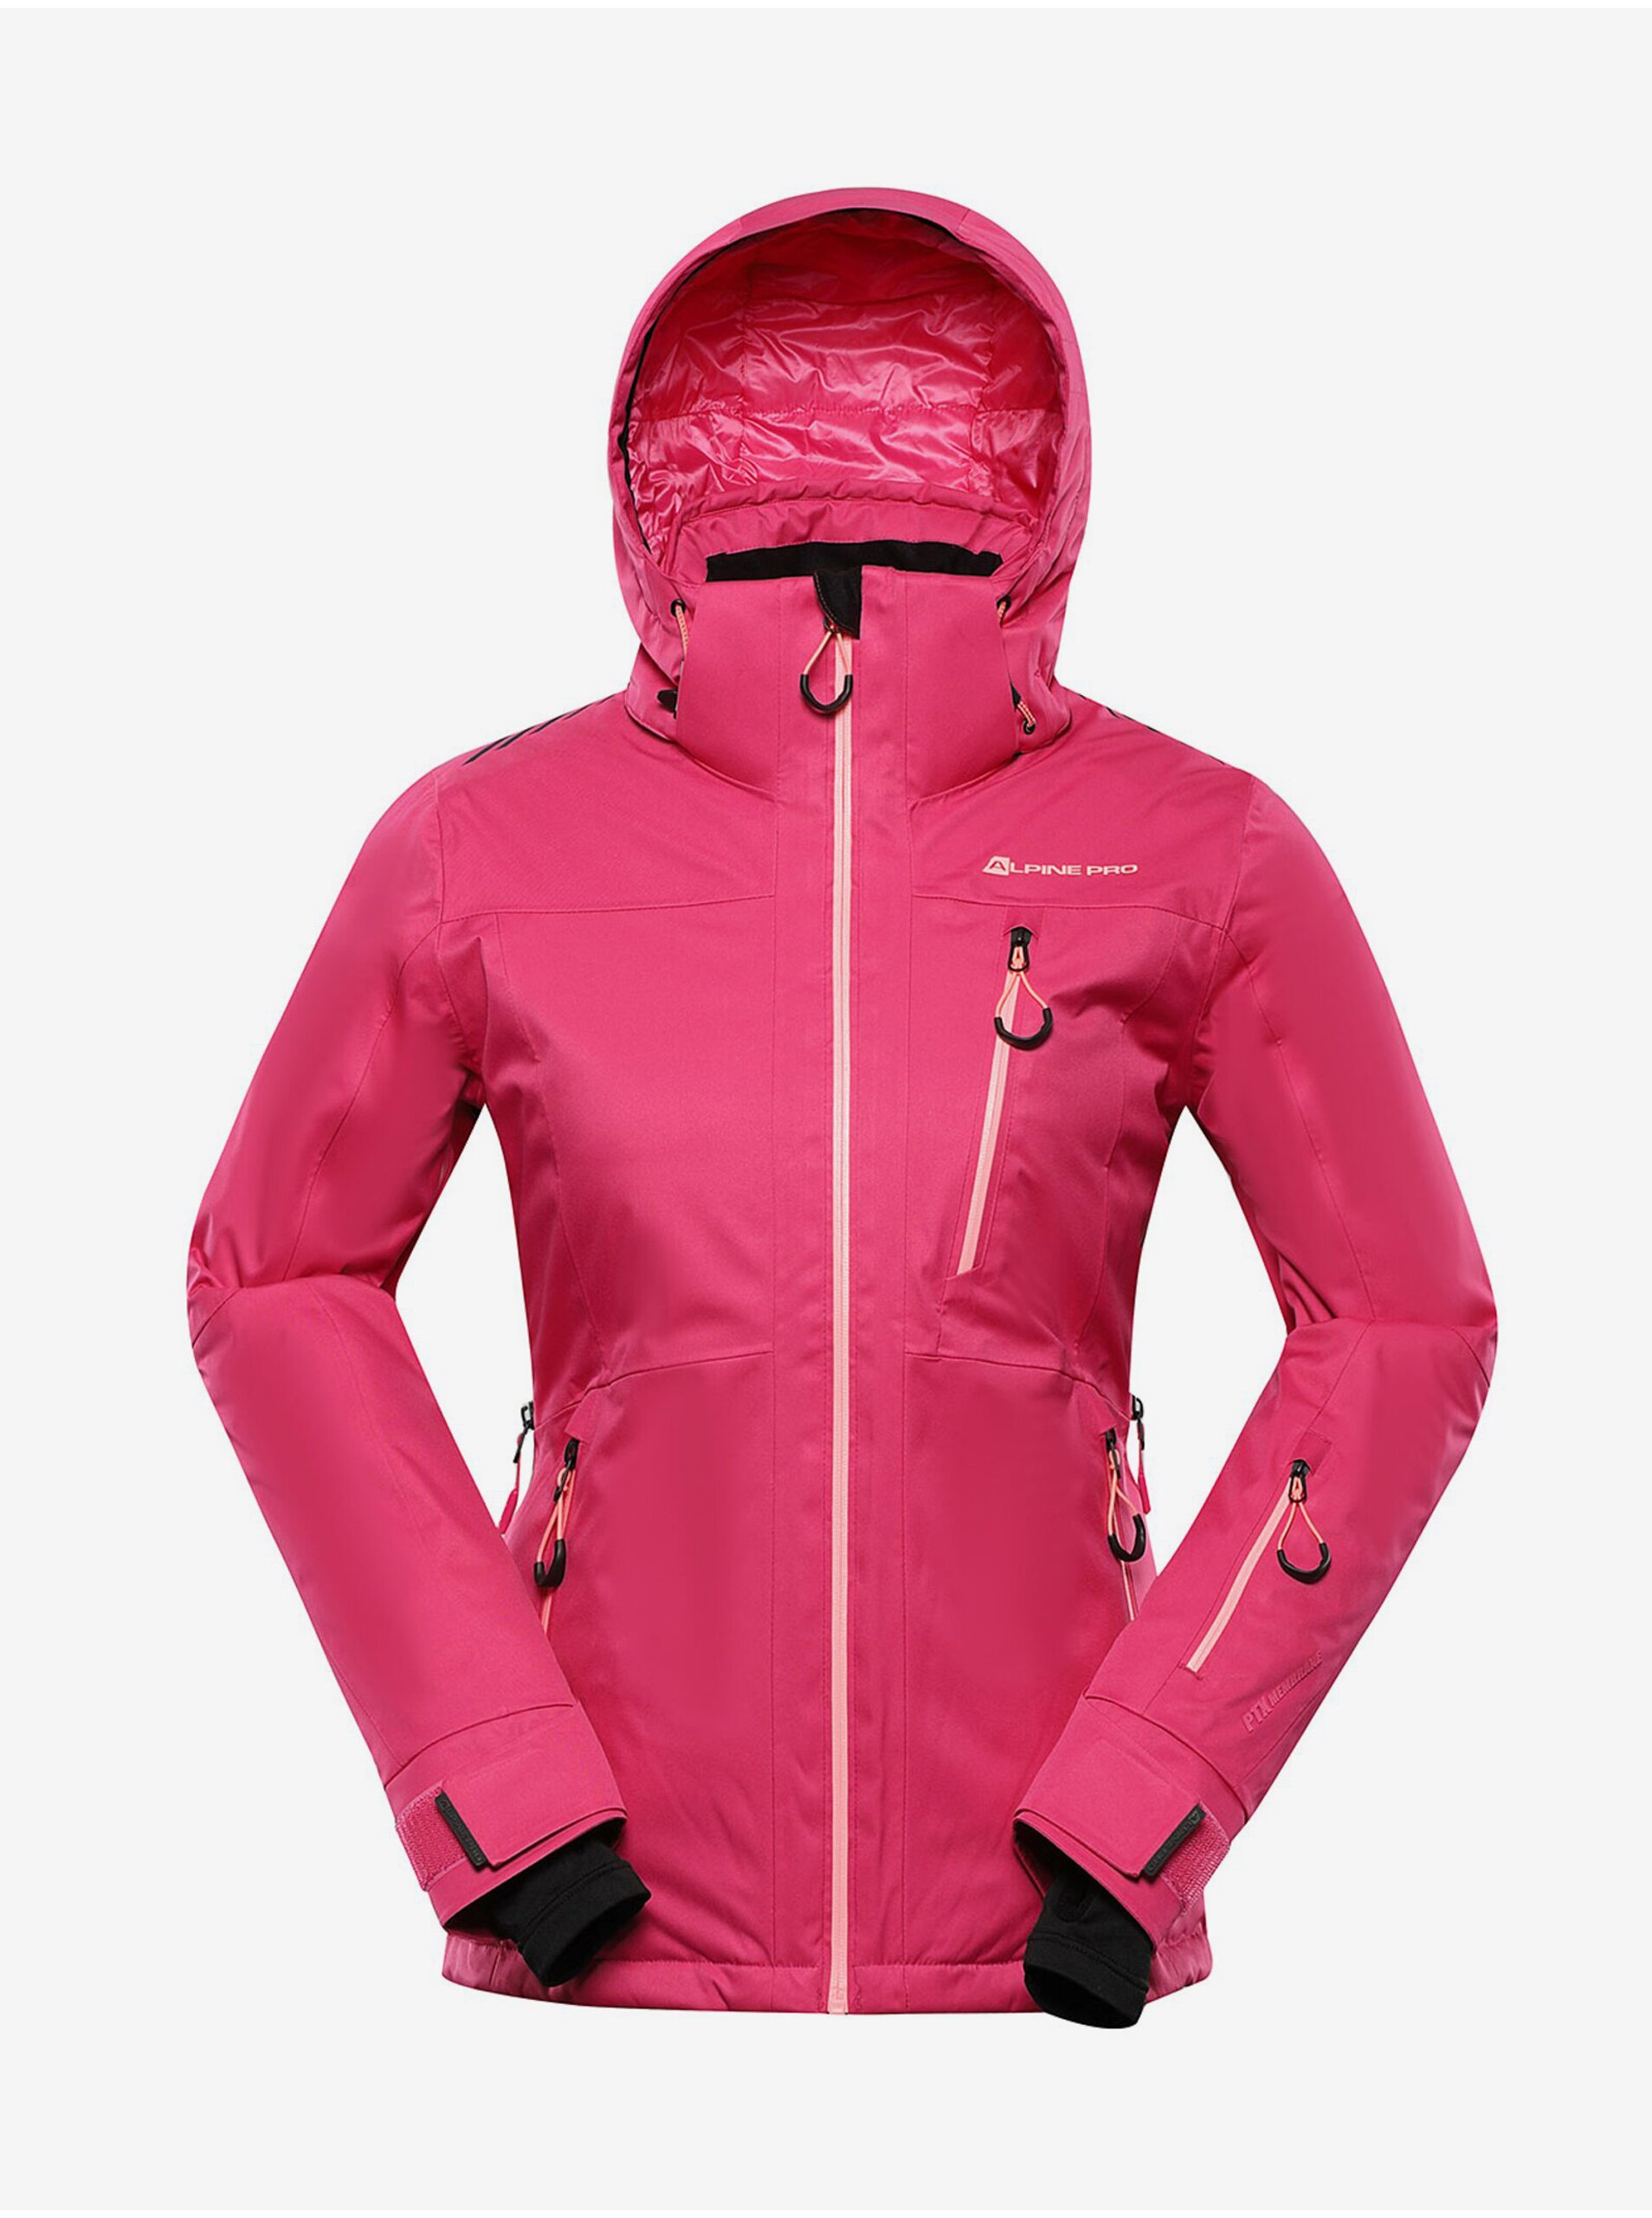 Lacno Tmavo ružová dámska lyžiarska bunda s membránou PTX ALPINE PRO Reama